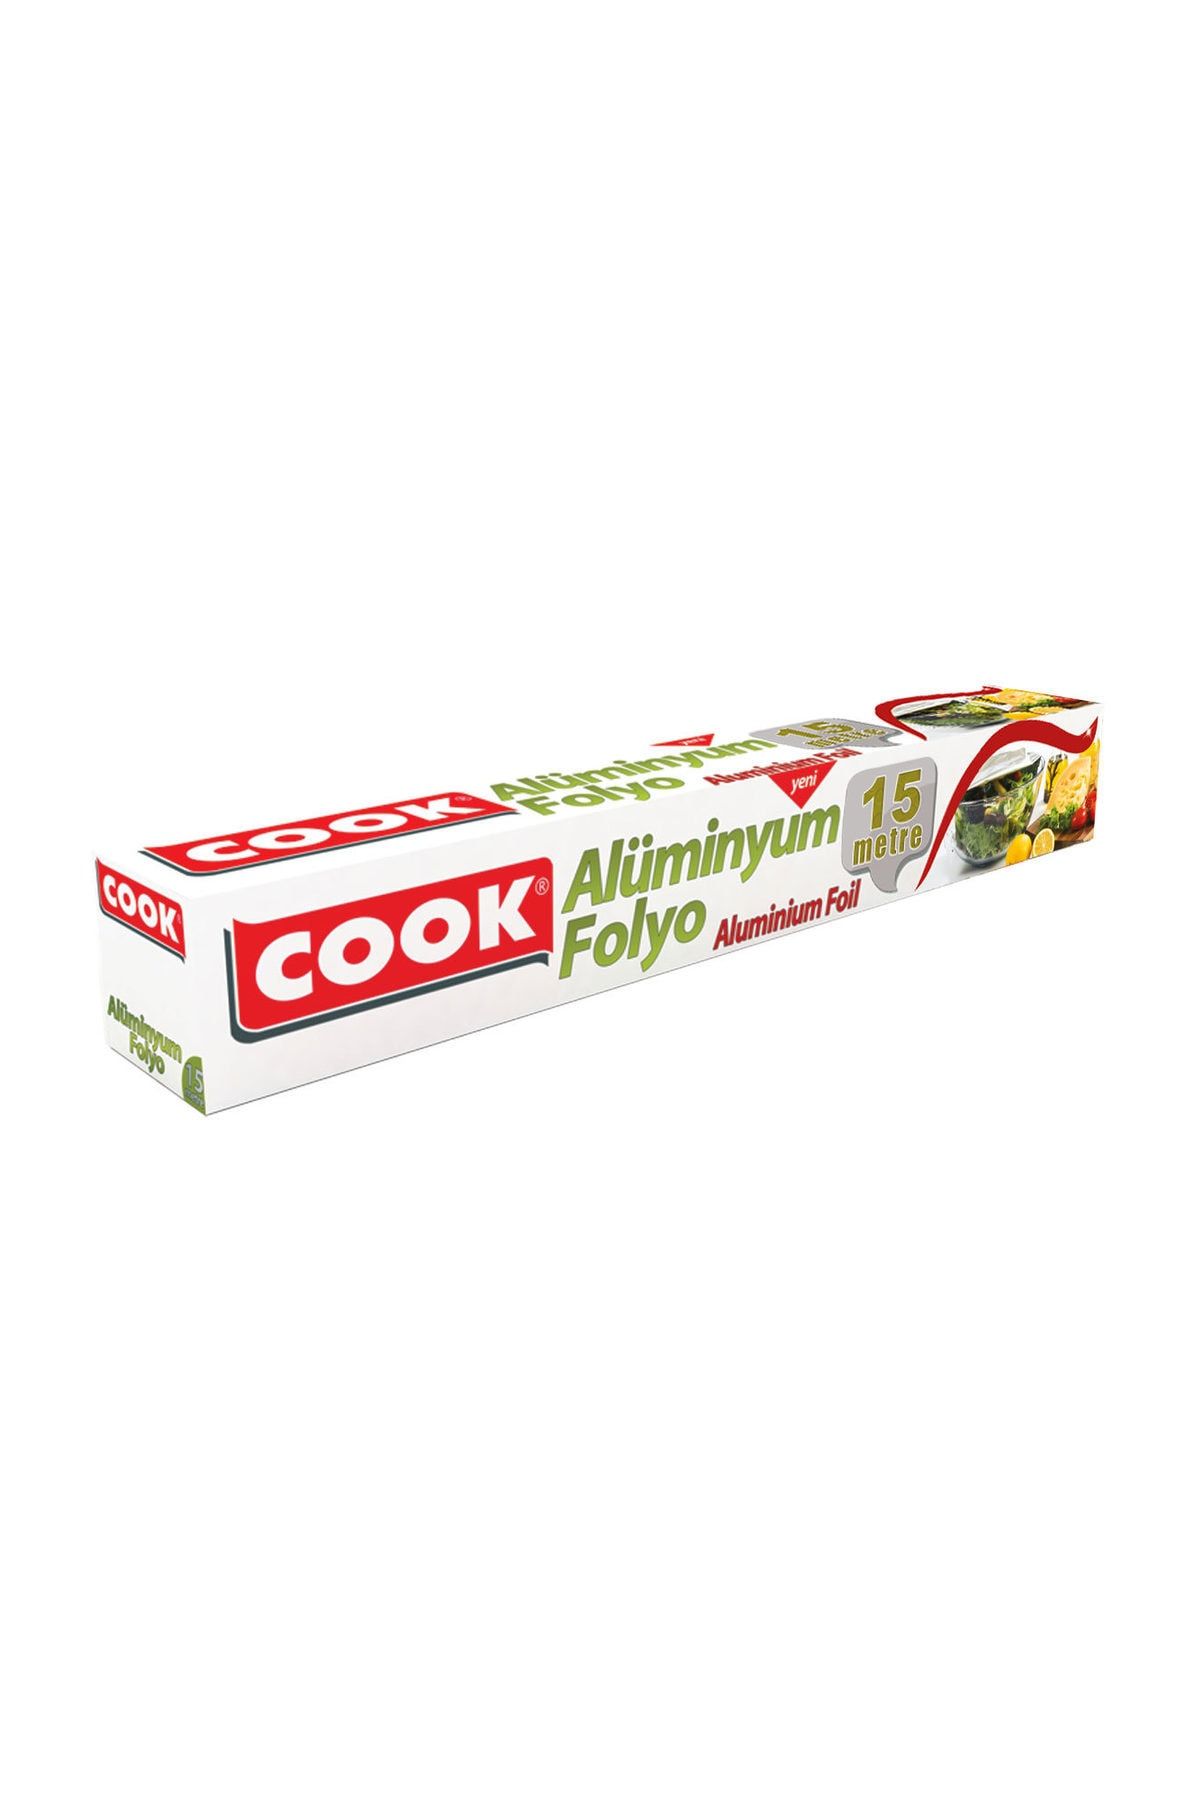 COOK Aluminyum Folyo 15 M